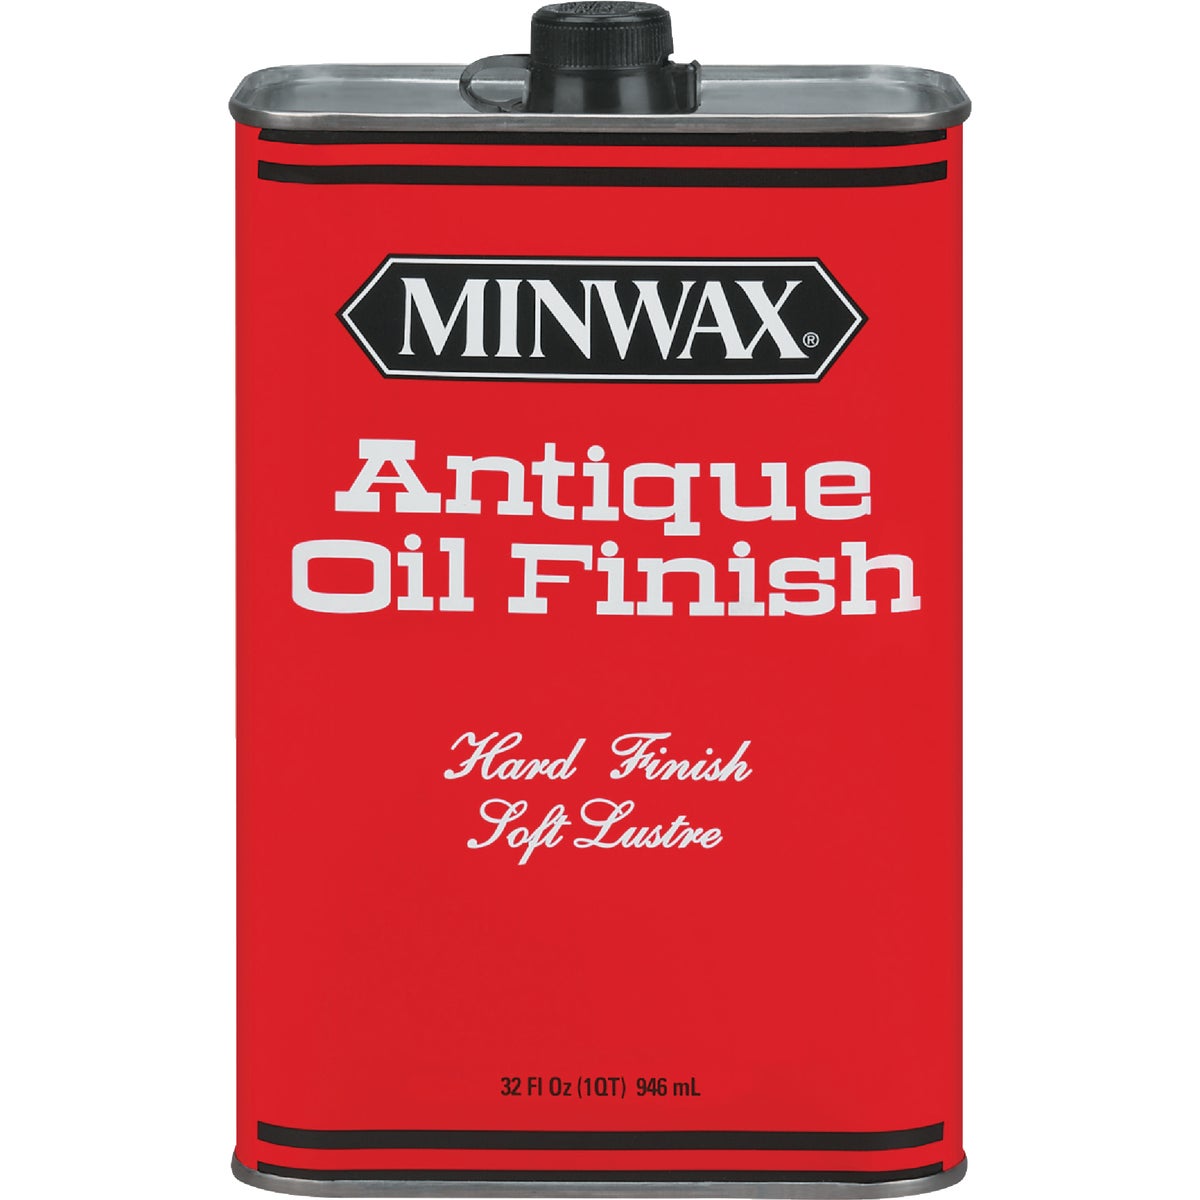 Minwax 1 Qt. Antique Oil Finish